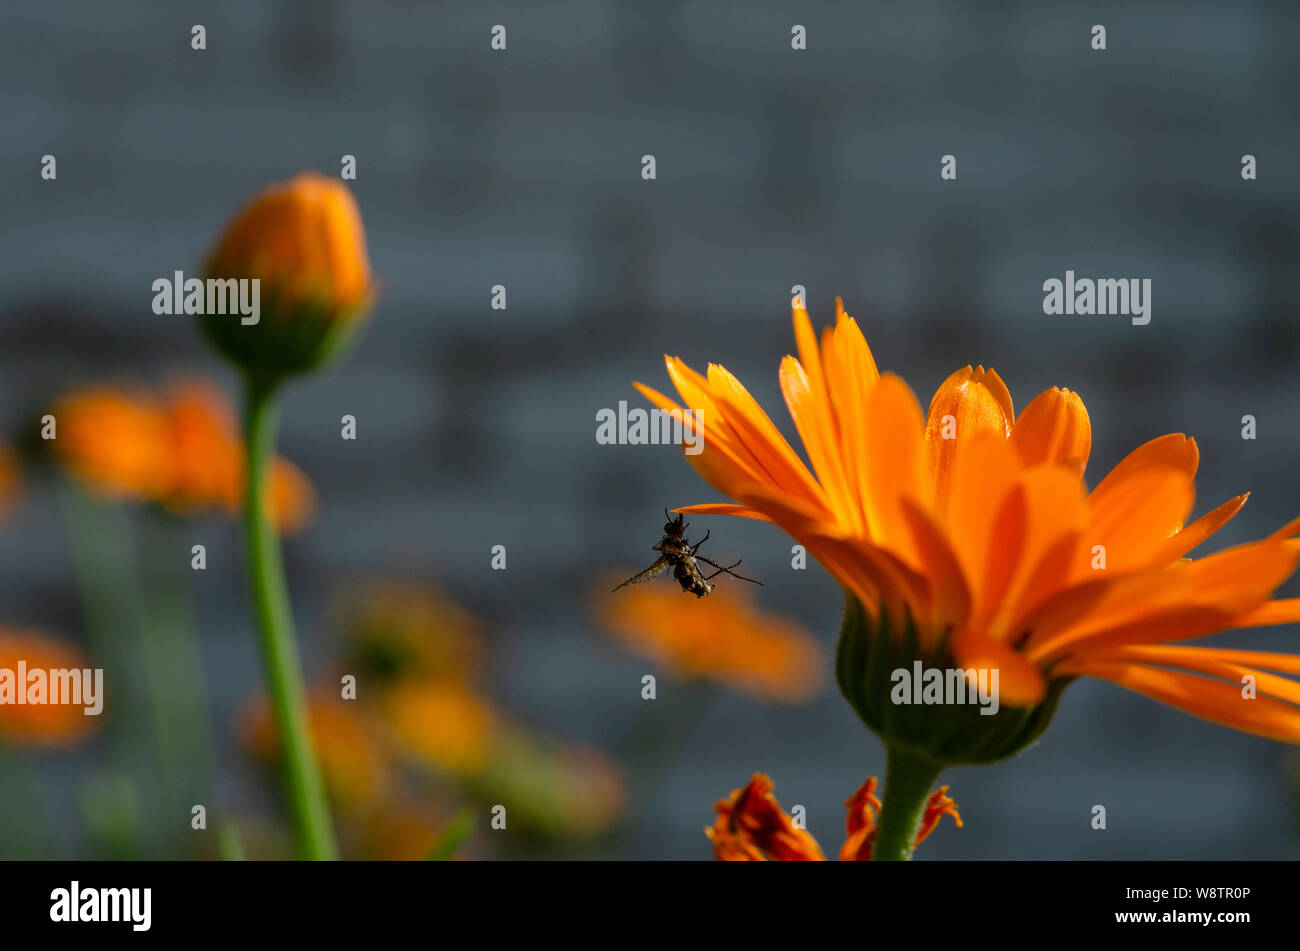 A dead bee on an orange daisy flower (calendula officinalis) Stock Photo